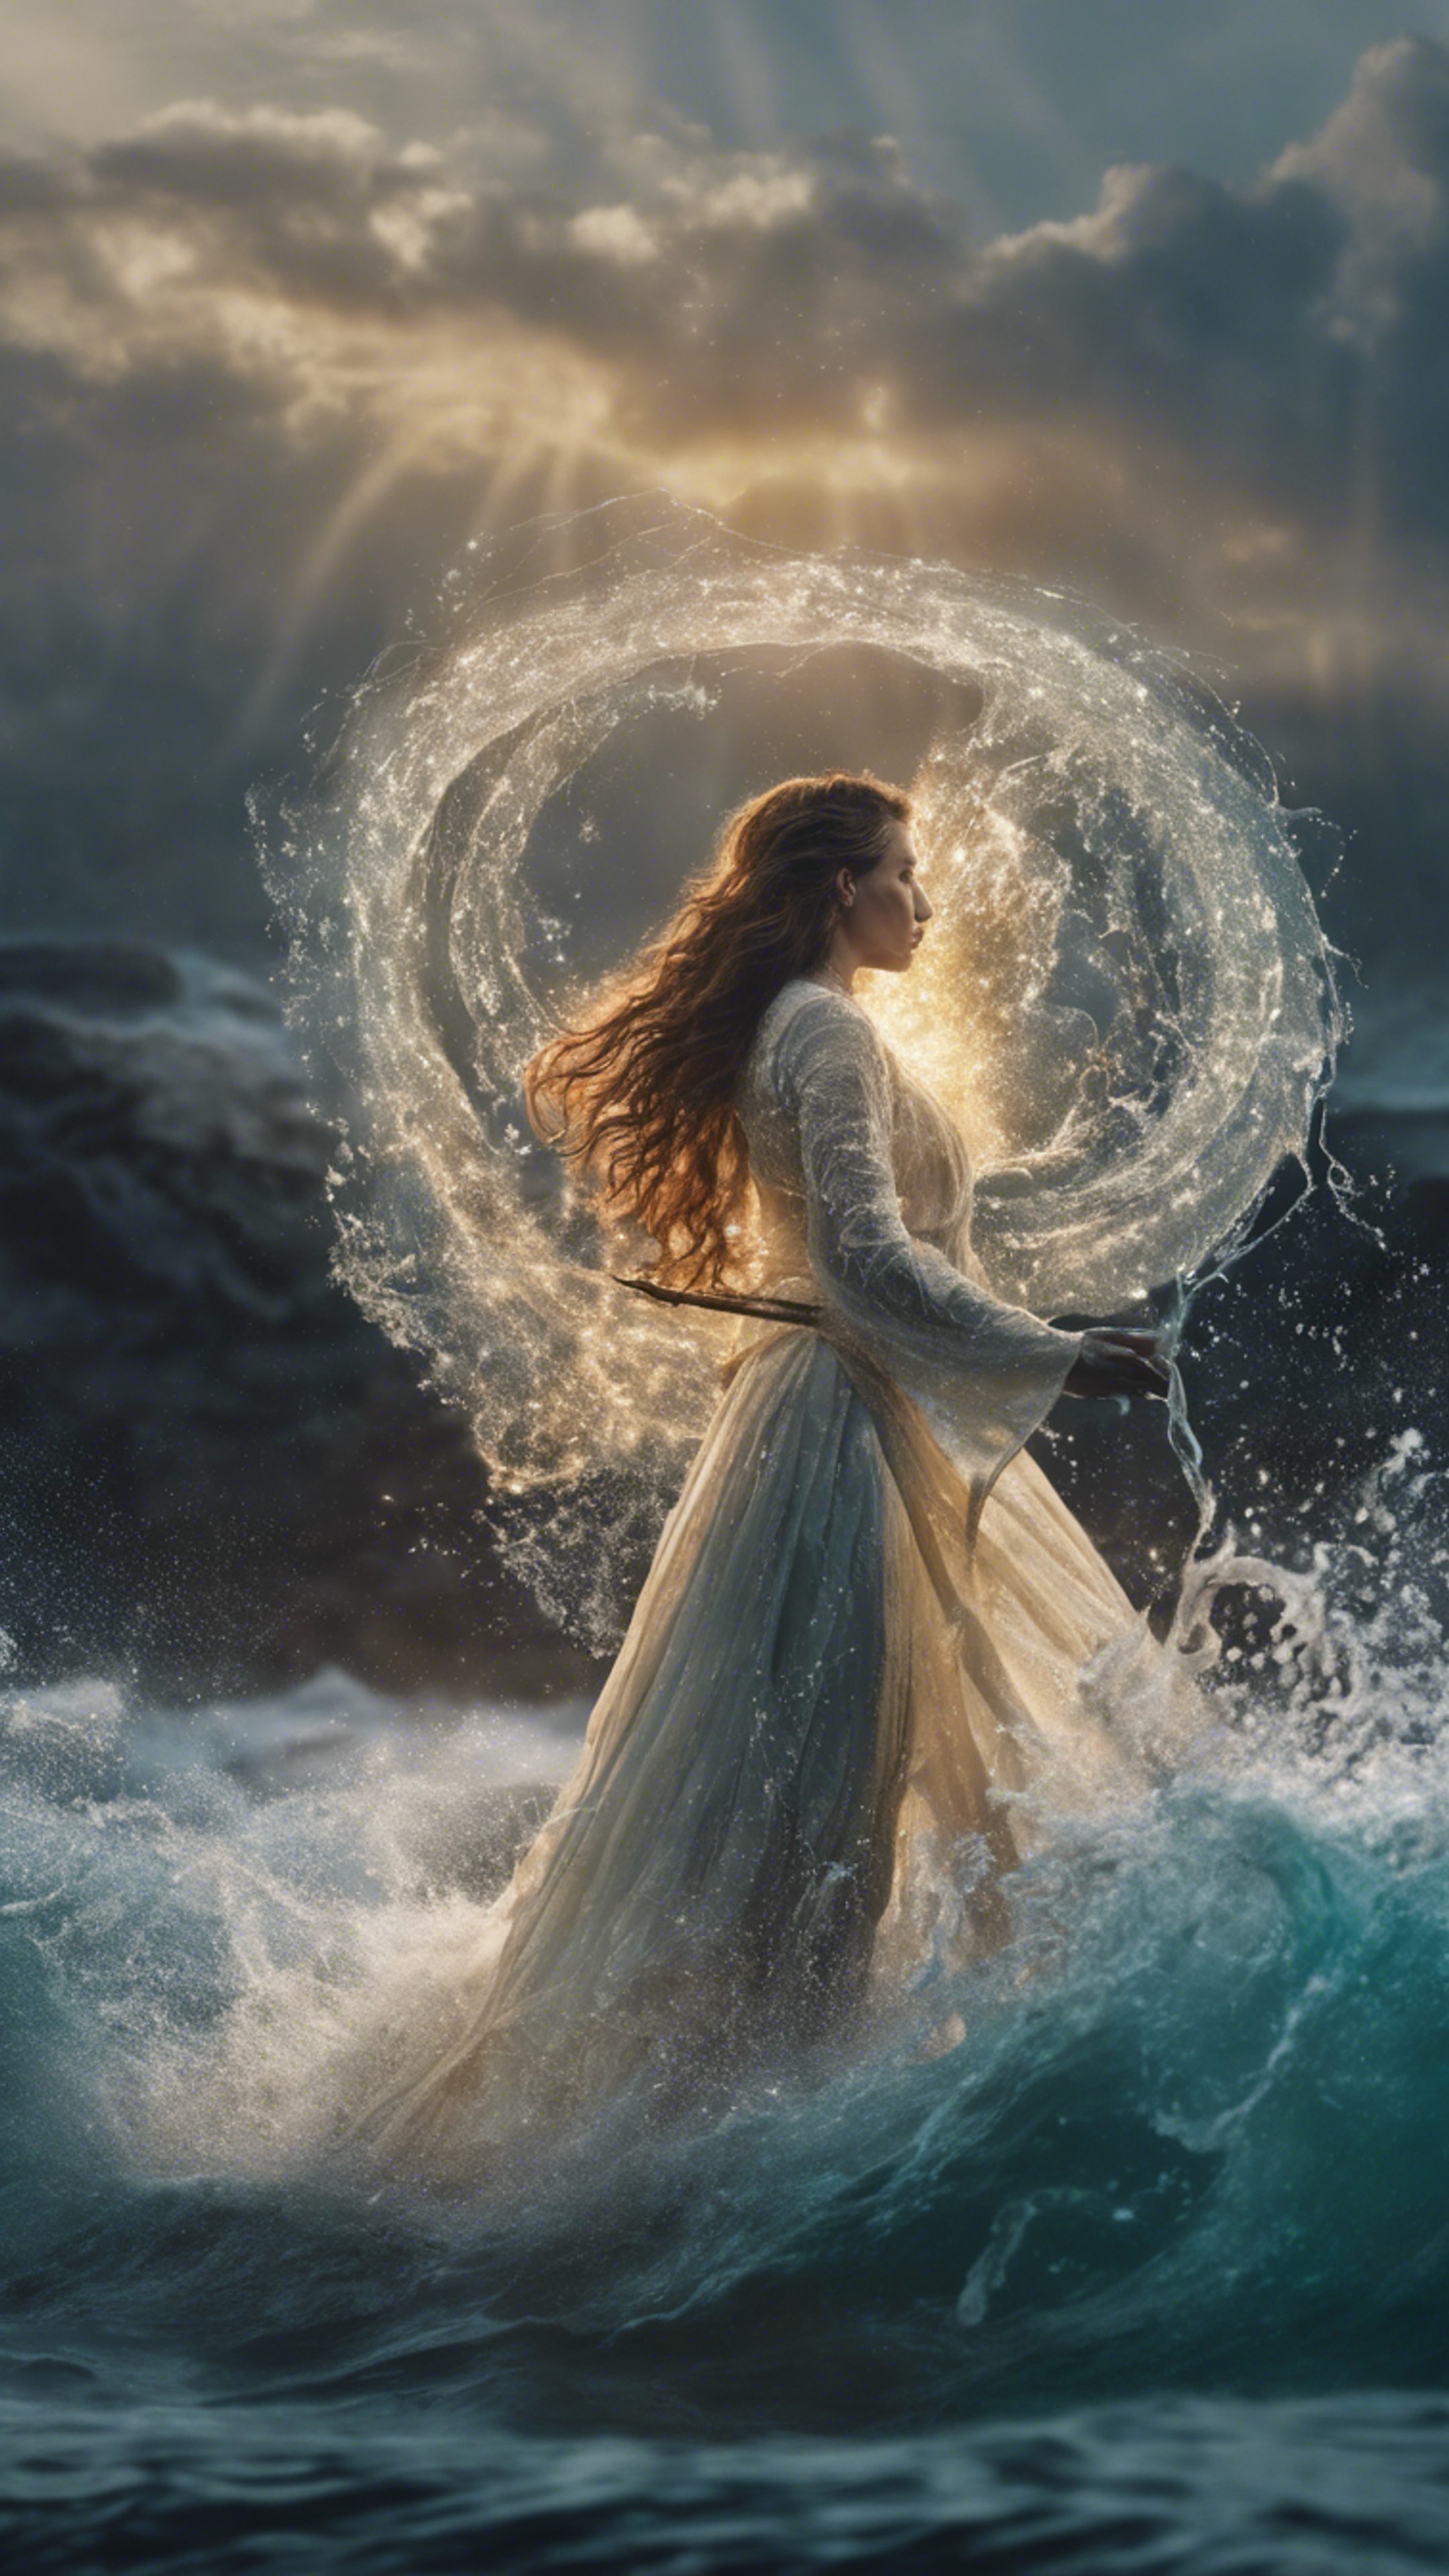 A magical woman weaving a spell that turns waves in an ocean into a gigantic water dragon. Wallpaper[497501a1a9a040e18b41]